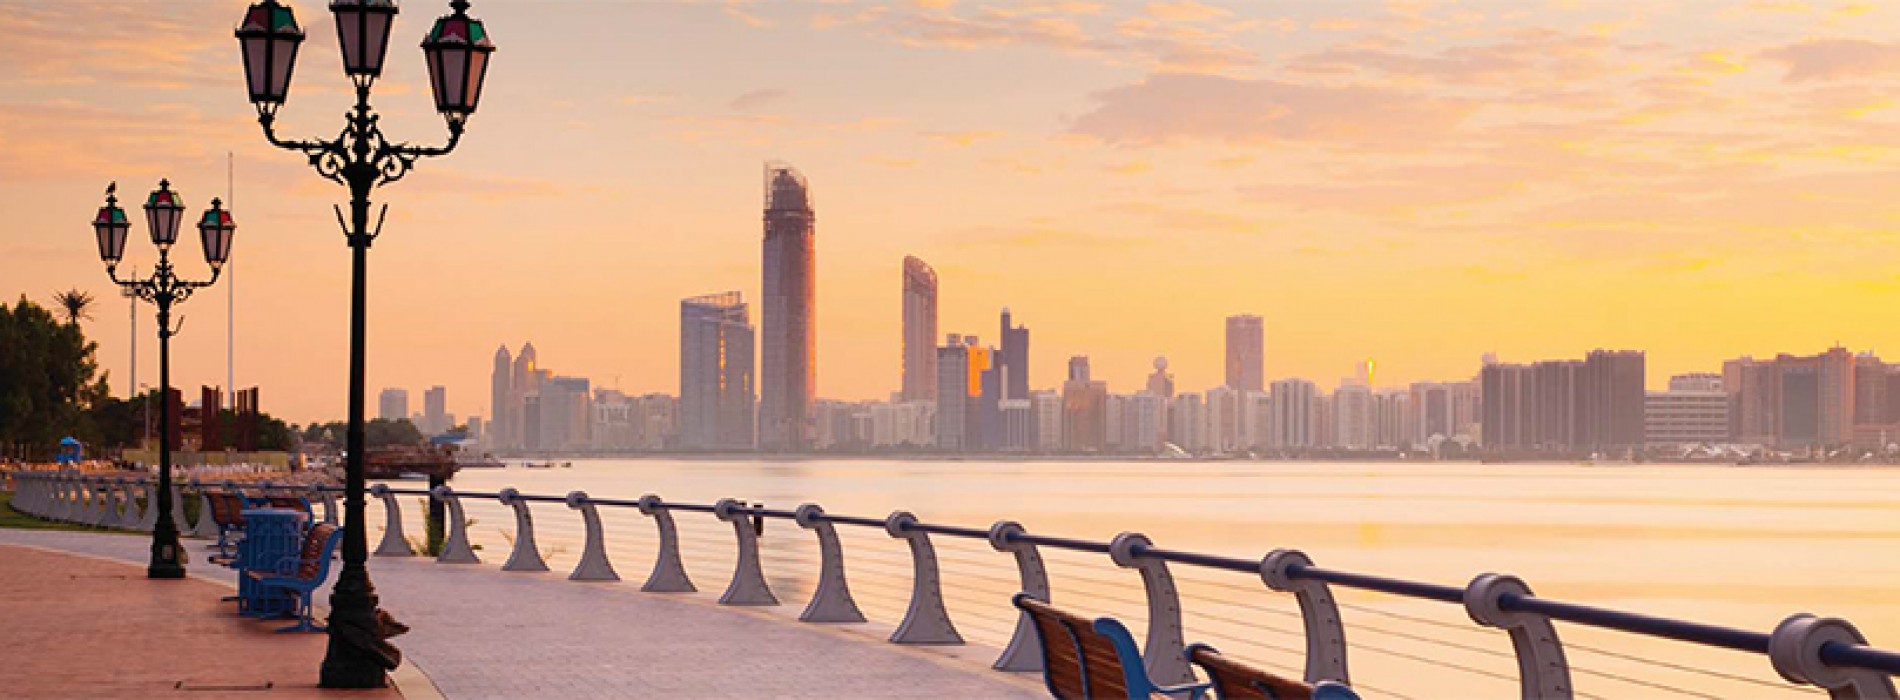 Dnata and Abu Dhabi Tourism & Culture Authority partner to promote Abu Dhabi Summer Season across India